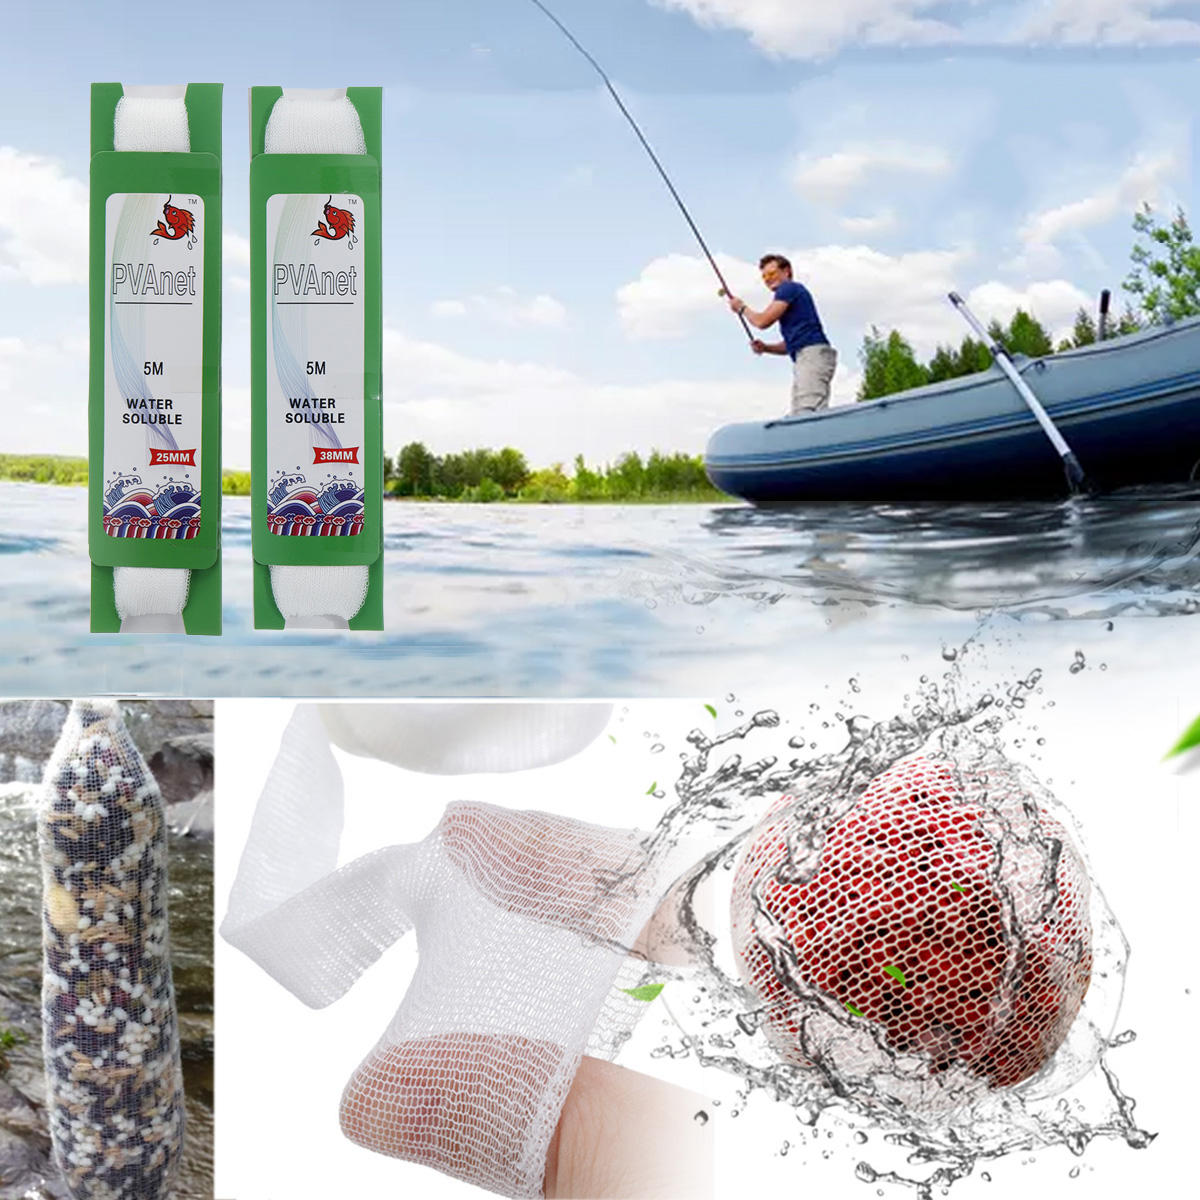 

ZANLURE 25mm Dissolving PVA Fishing Net Fishing Bait Thrower Fishing Cage Play Nest Device